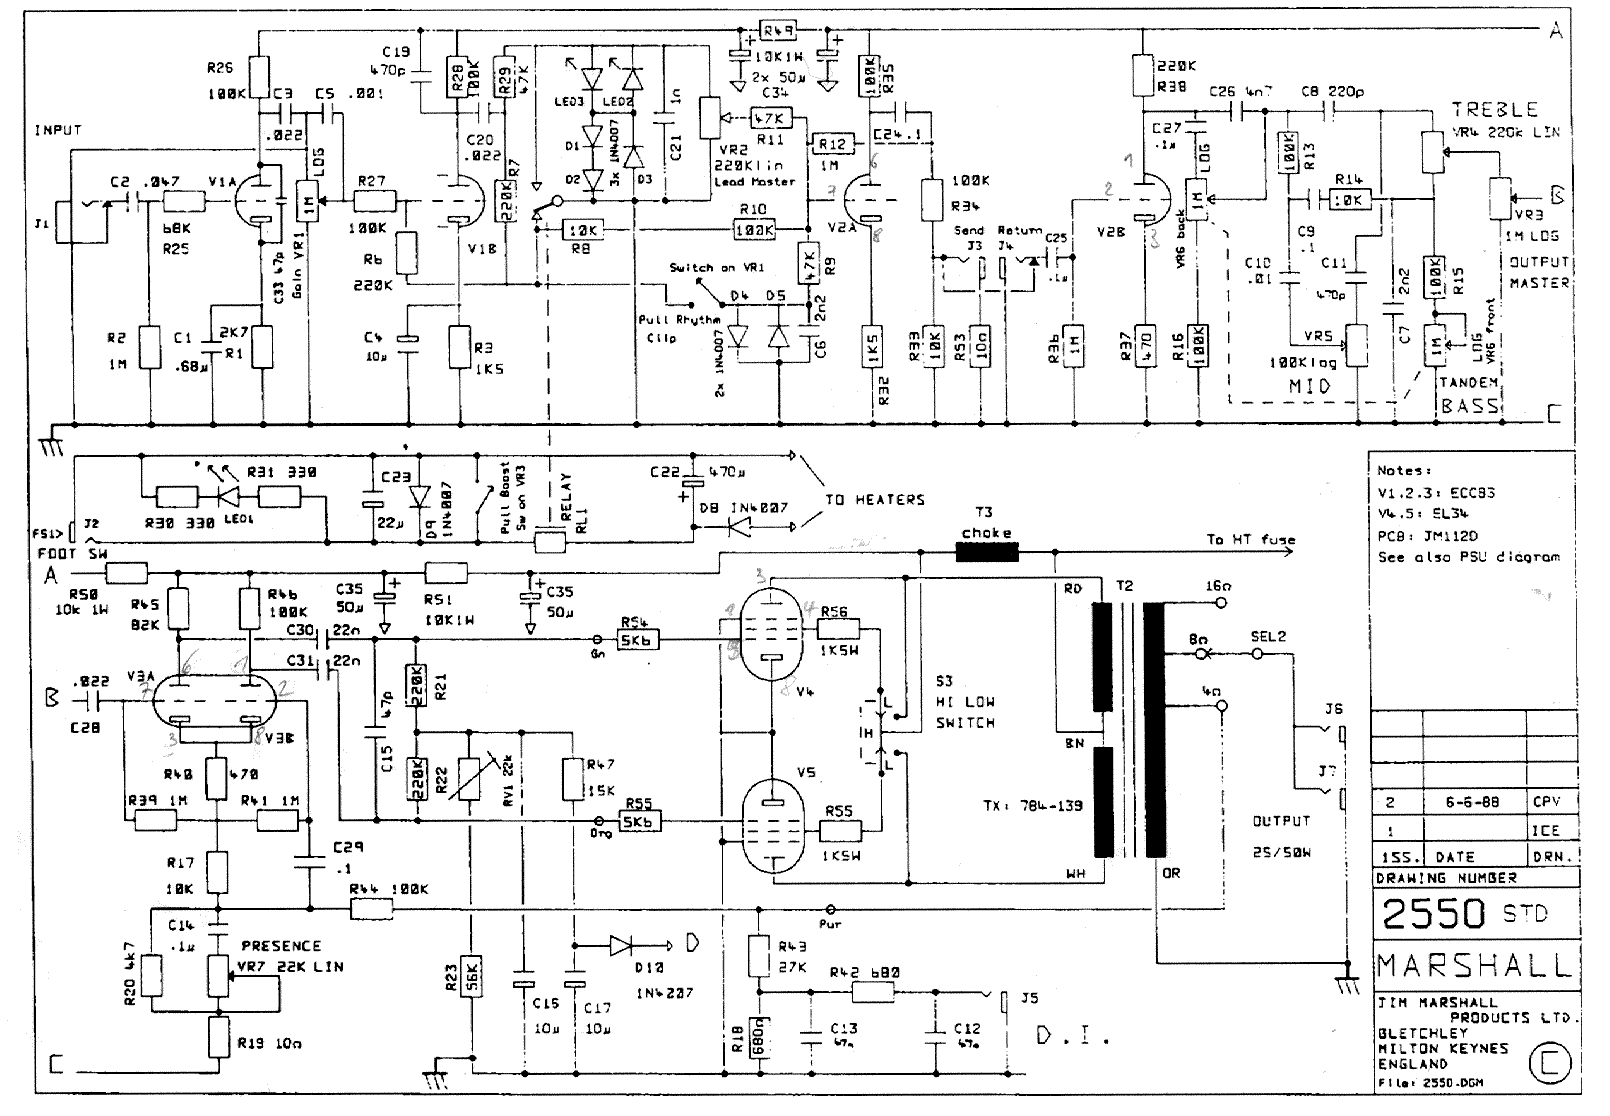 Marshall 2550 STD Schematic